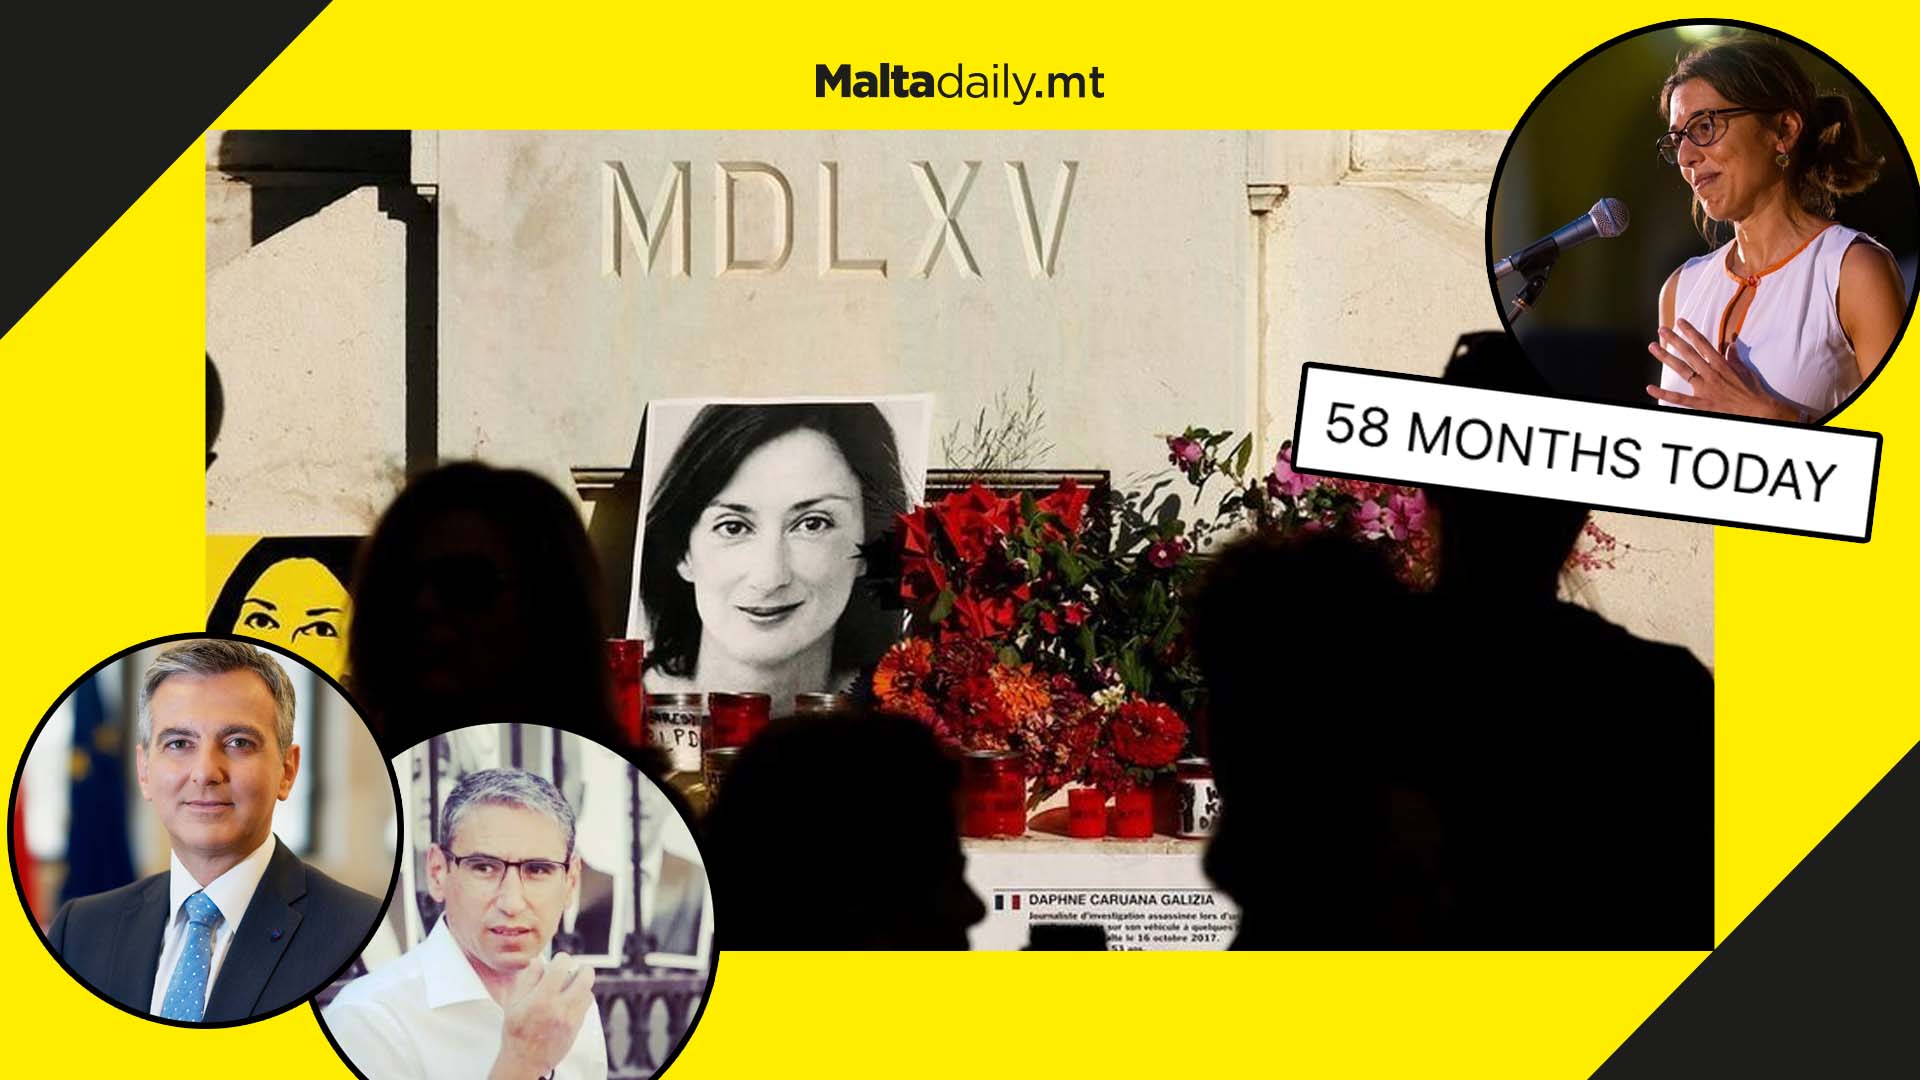 Many commemorate 58 months since Daphne Caruana Galizia’s assassination